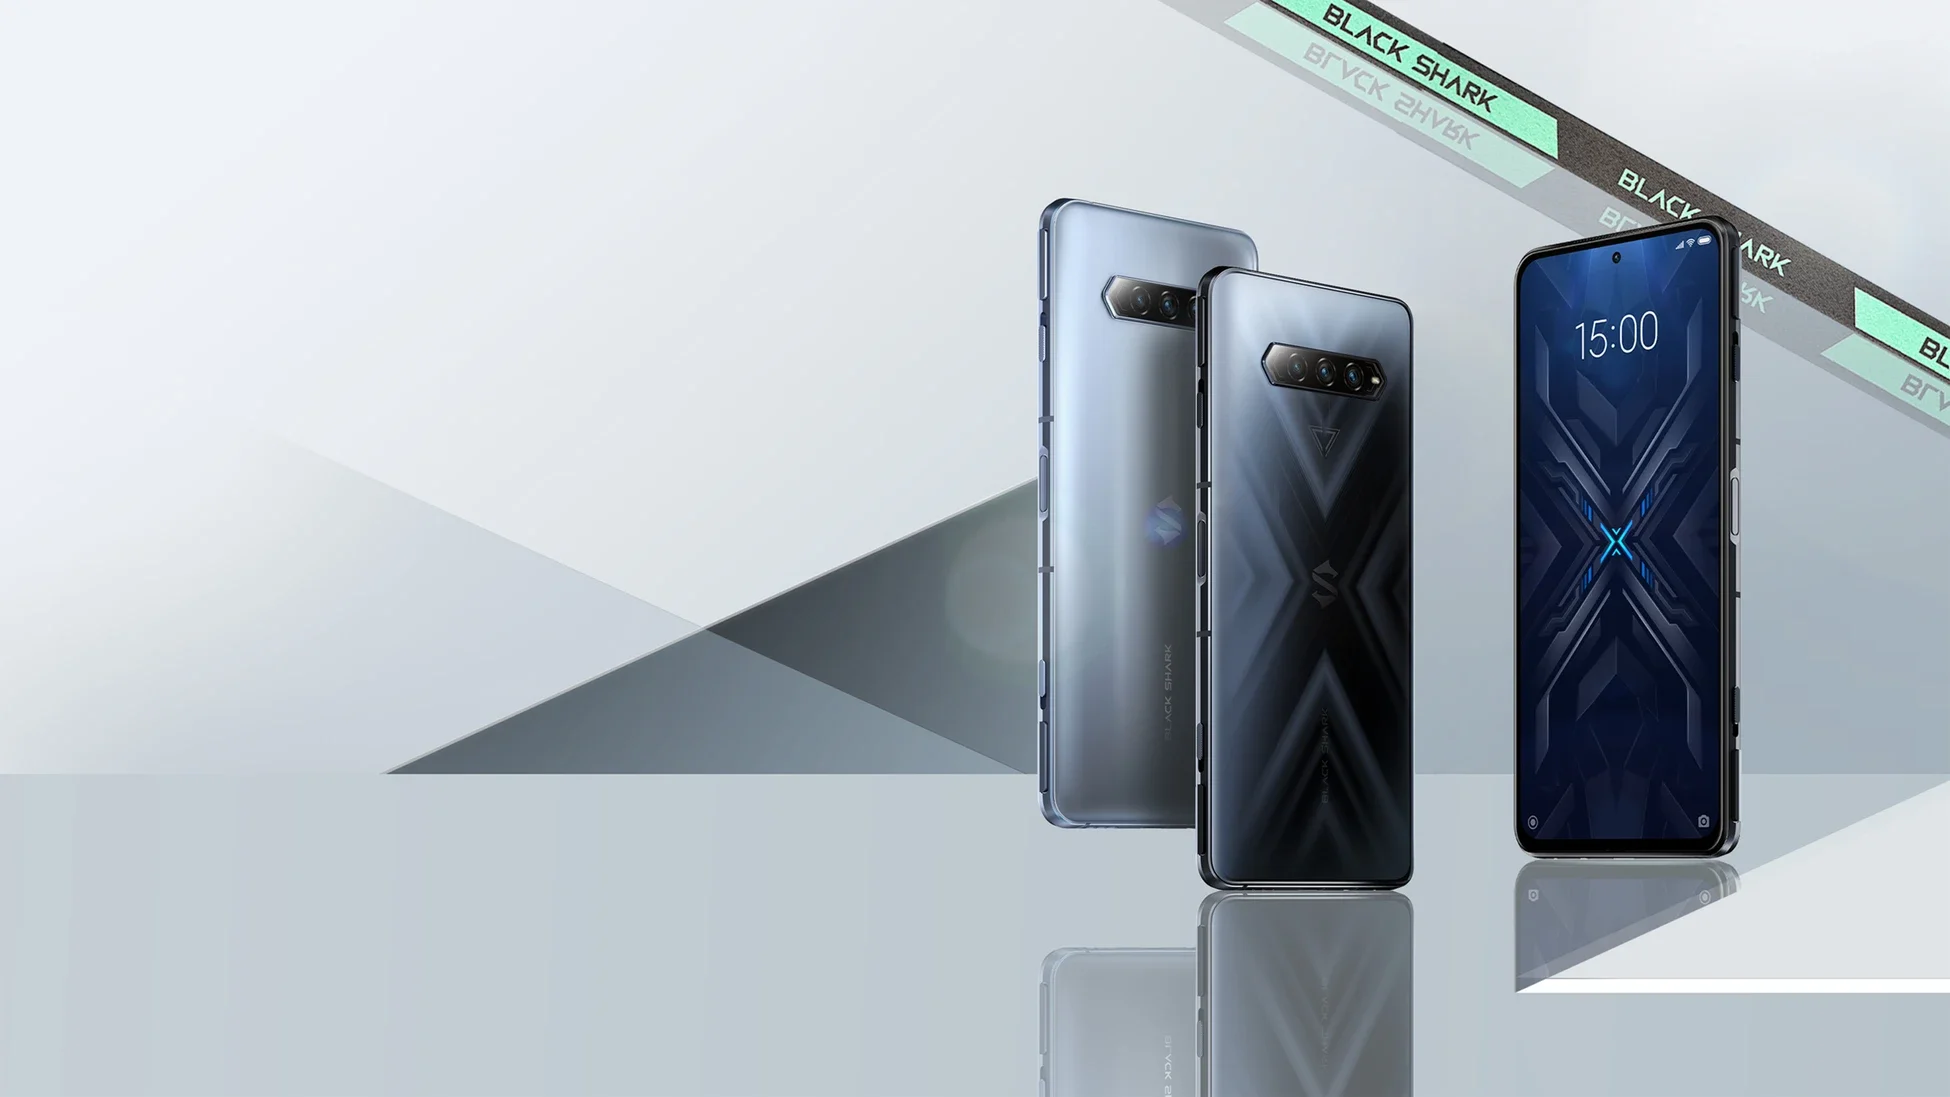 ddr4 ram IN STOCK Global Version Black Shark 4 5G Gaming Smart Phone 6.67 Inch Celular NFC Snapdragon Magnetic Pop-Up Triggers Cellphone ram pc